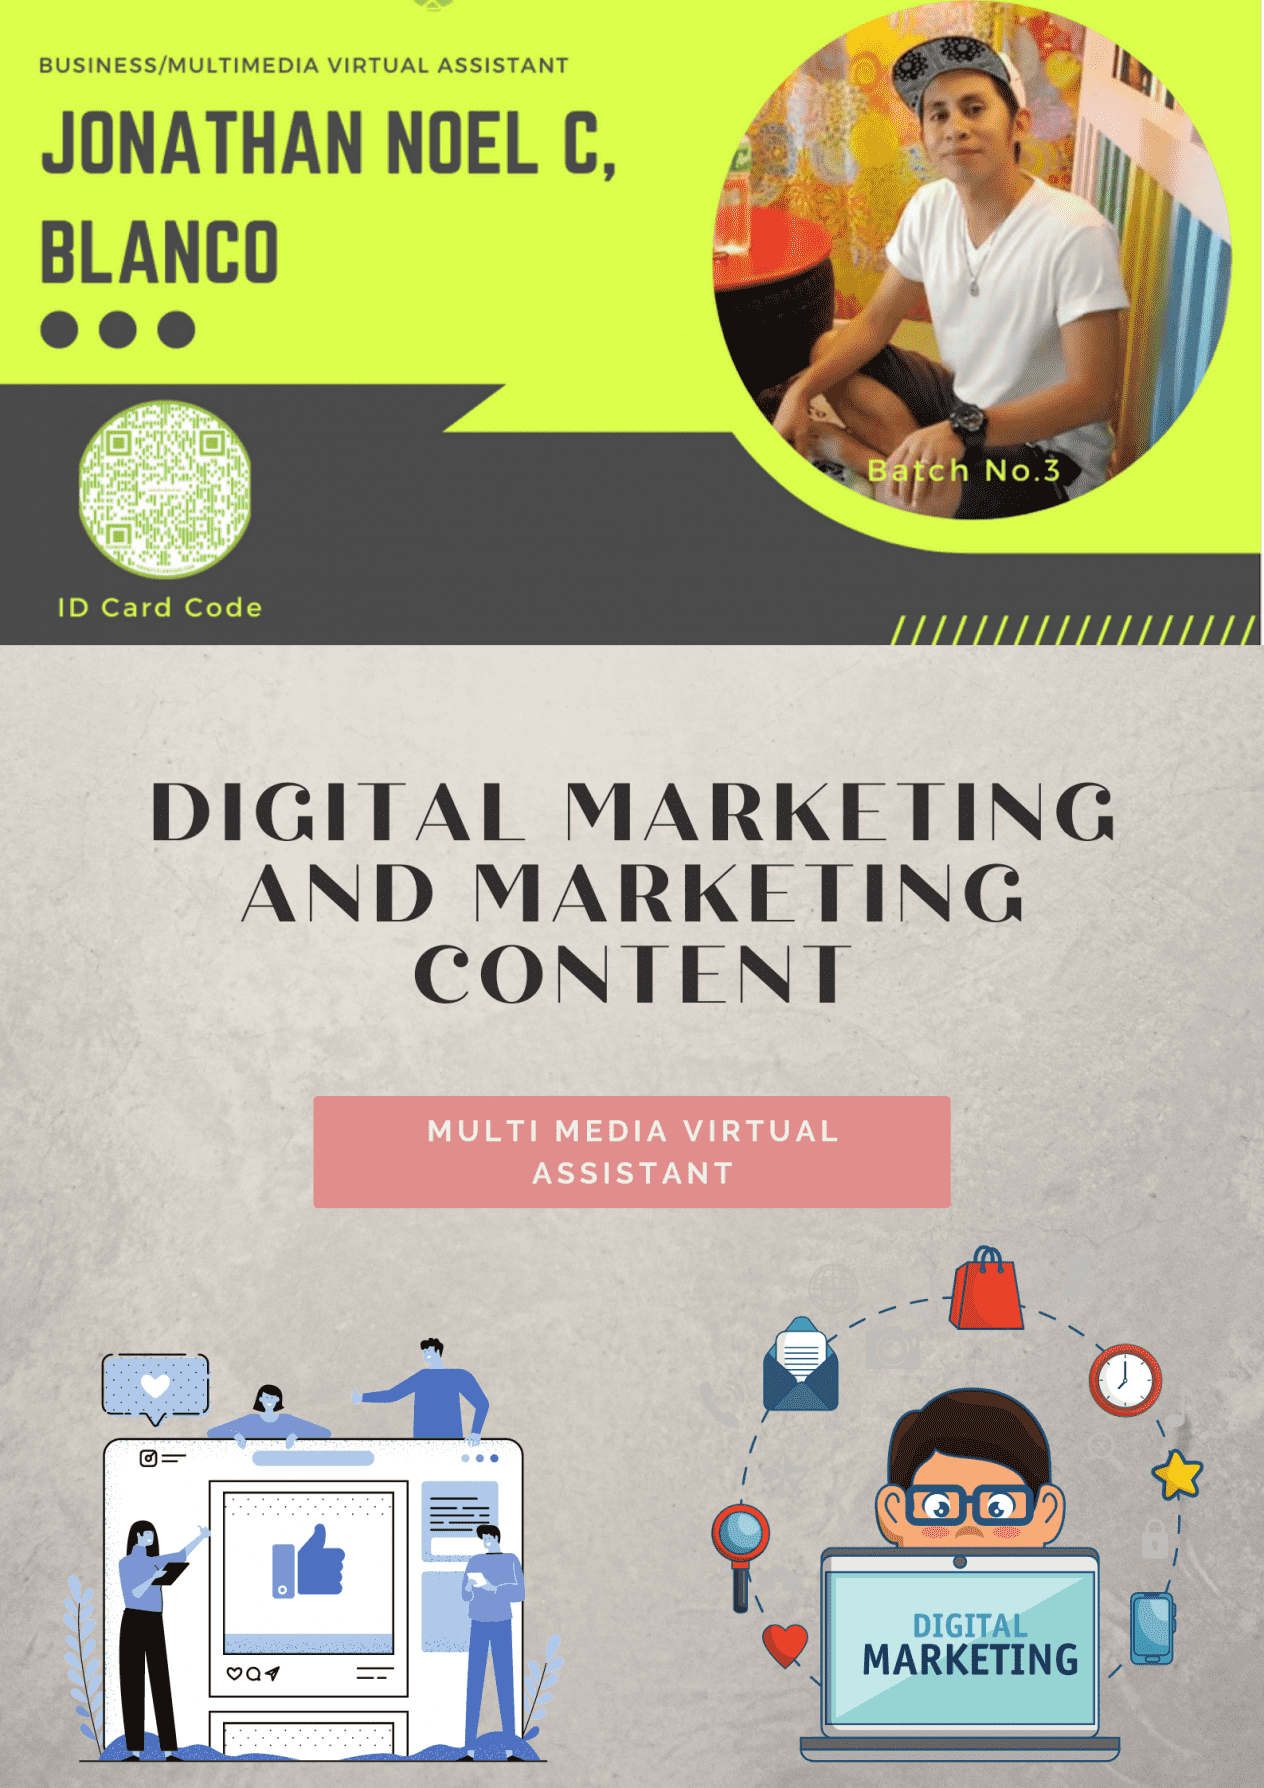 Content Creator and Digital Marketing